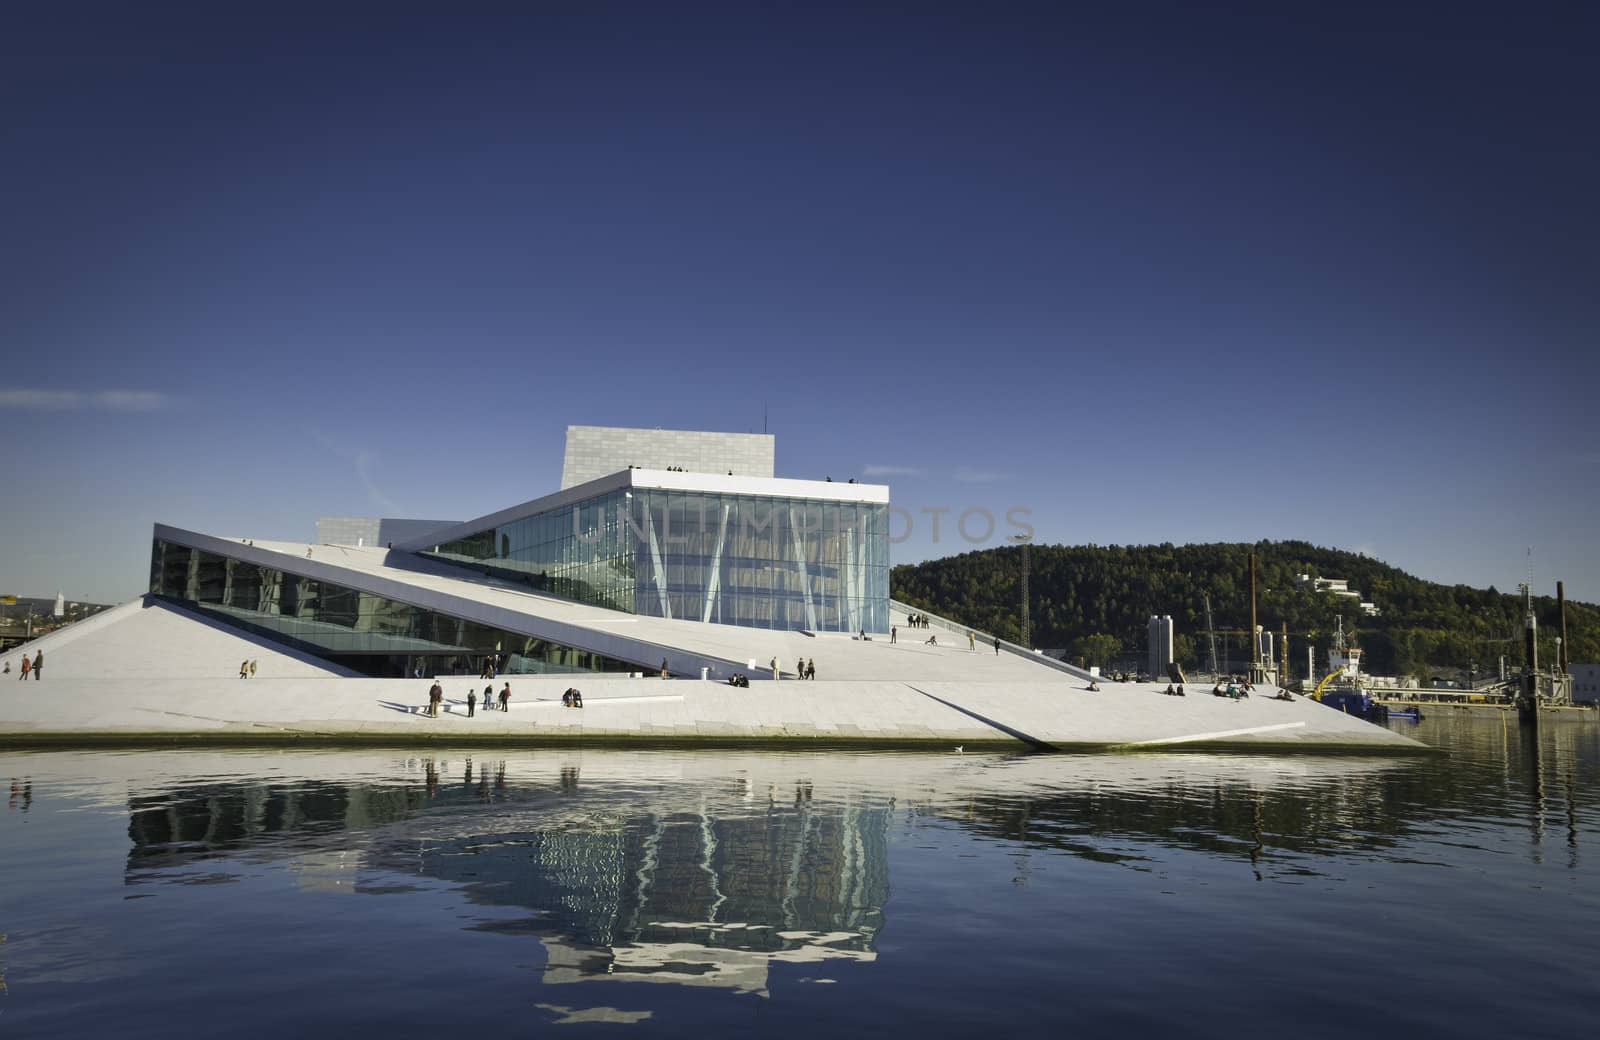 The Opera in Oslo, Norway by frodelil